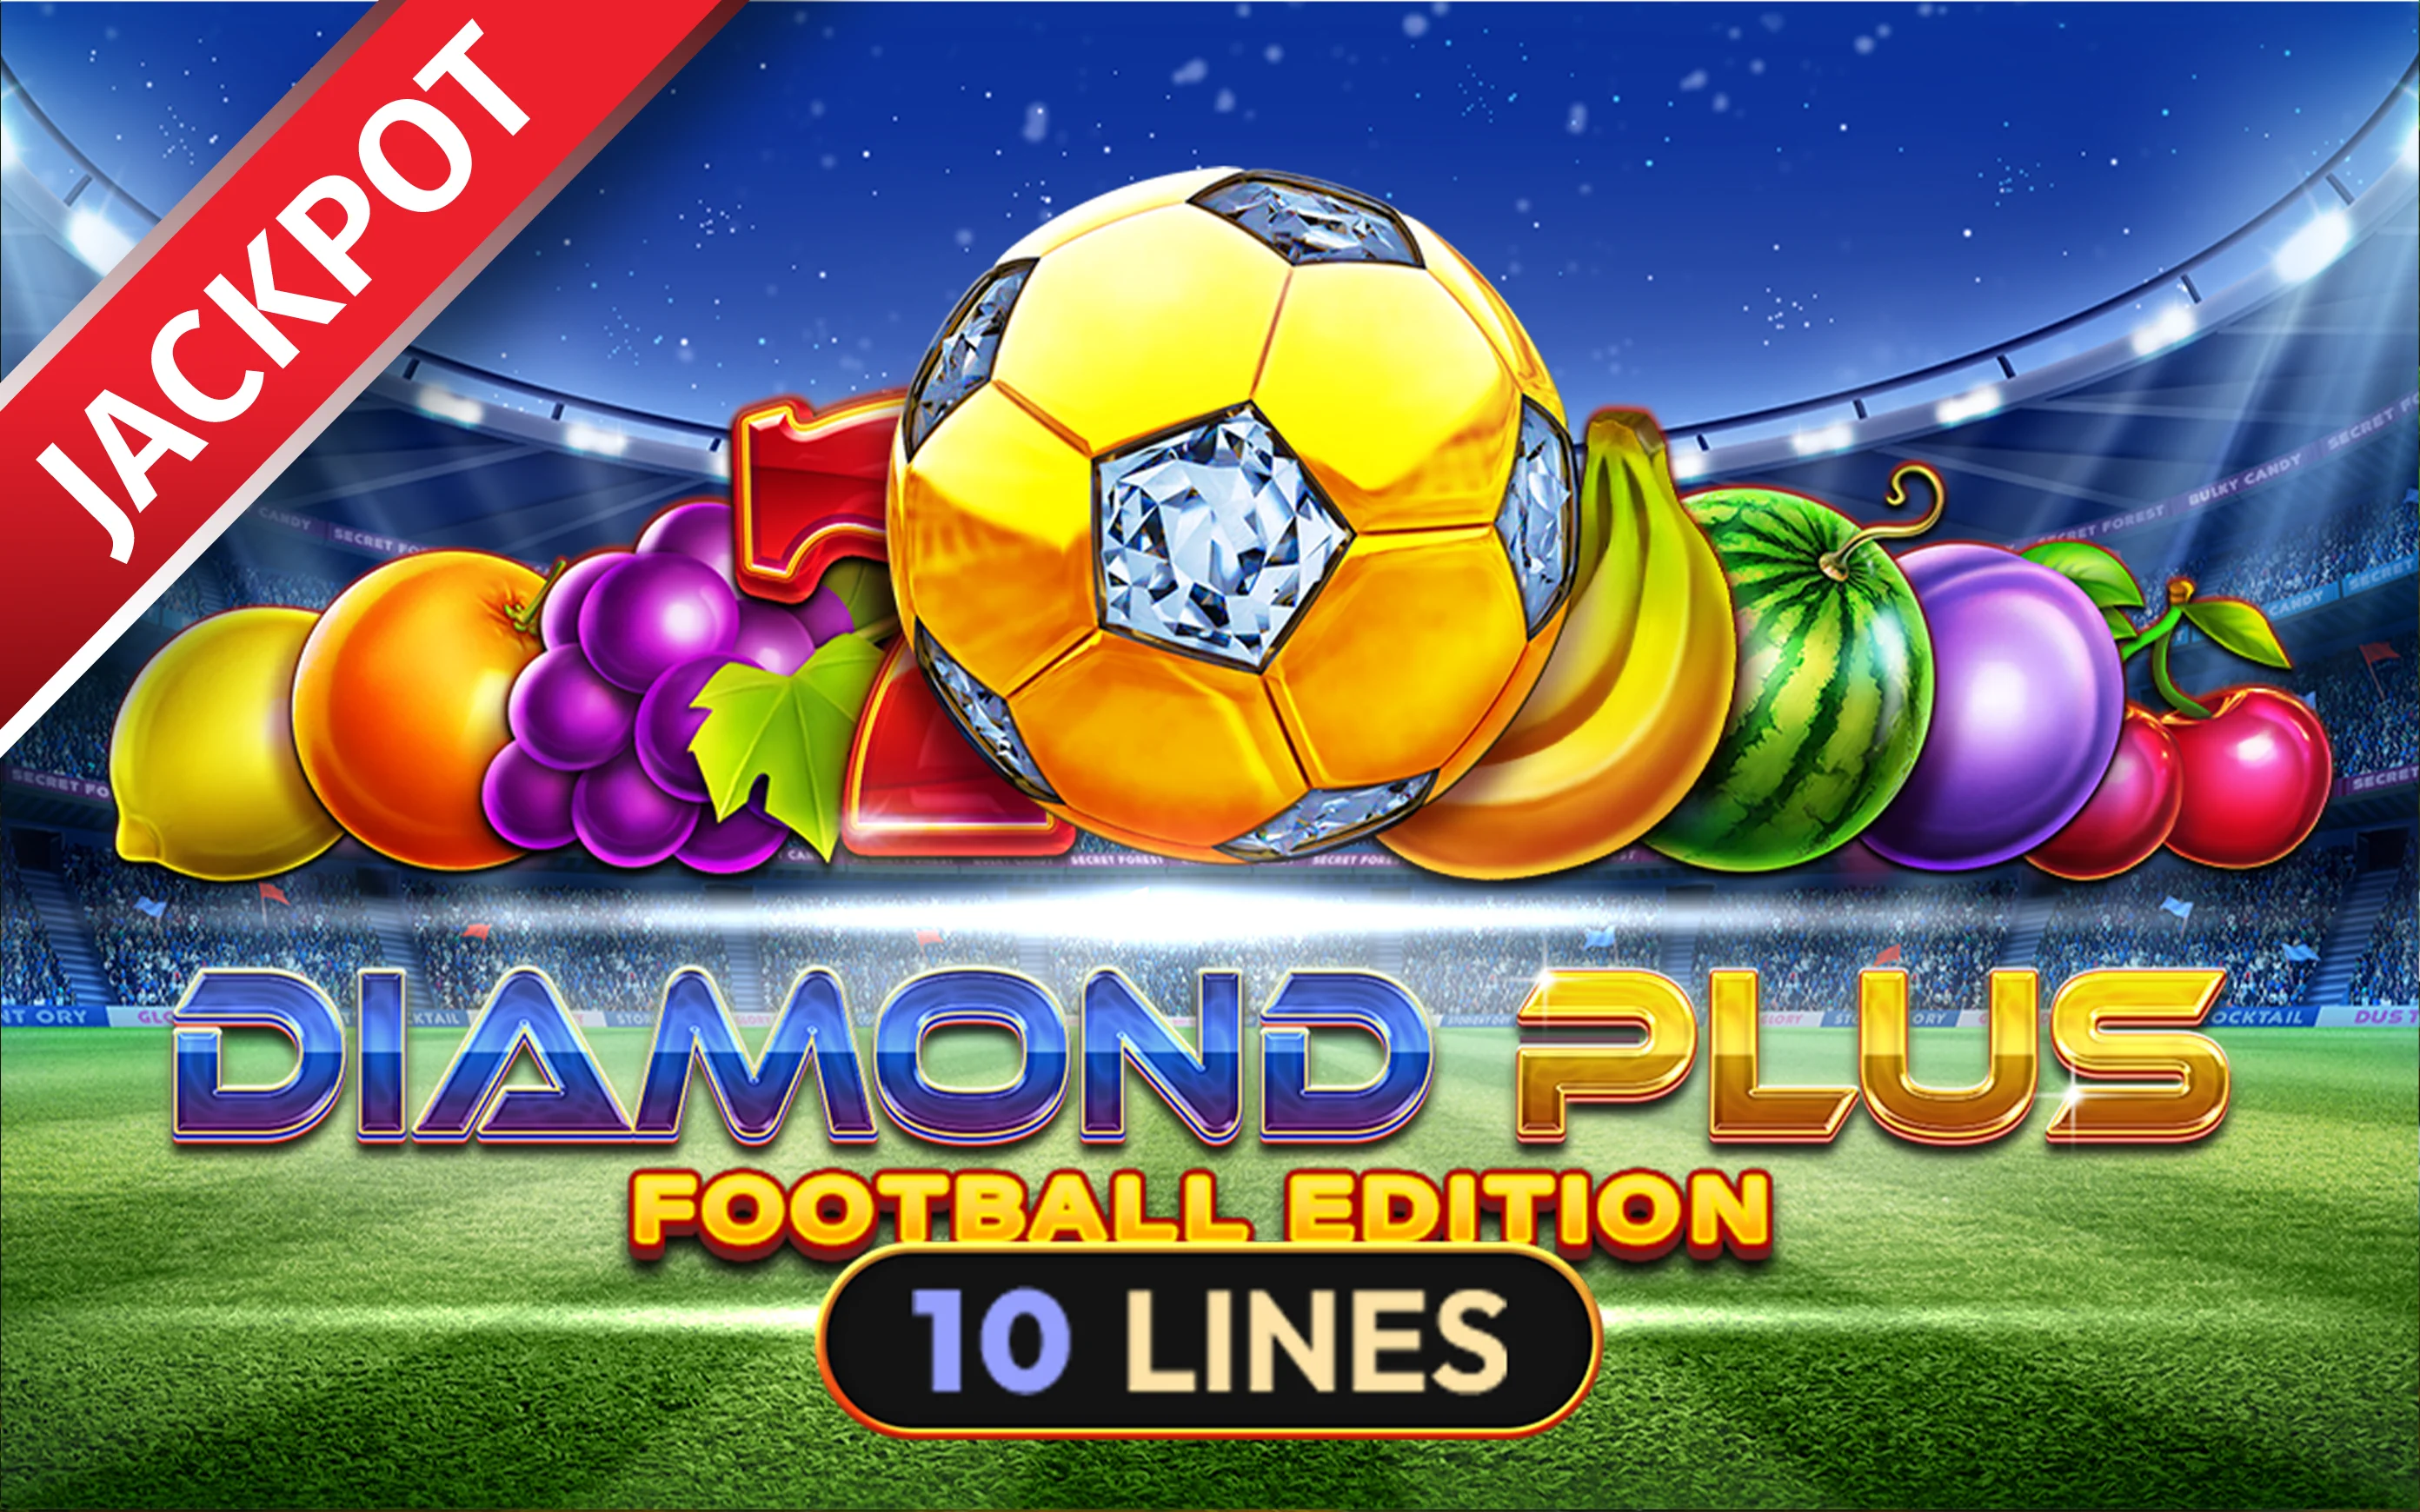 Play Diamond Plus Football Edition on Starcasino.be online casino